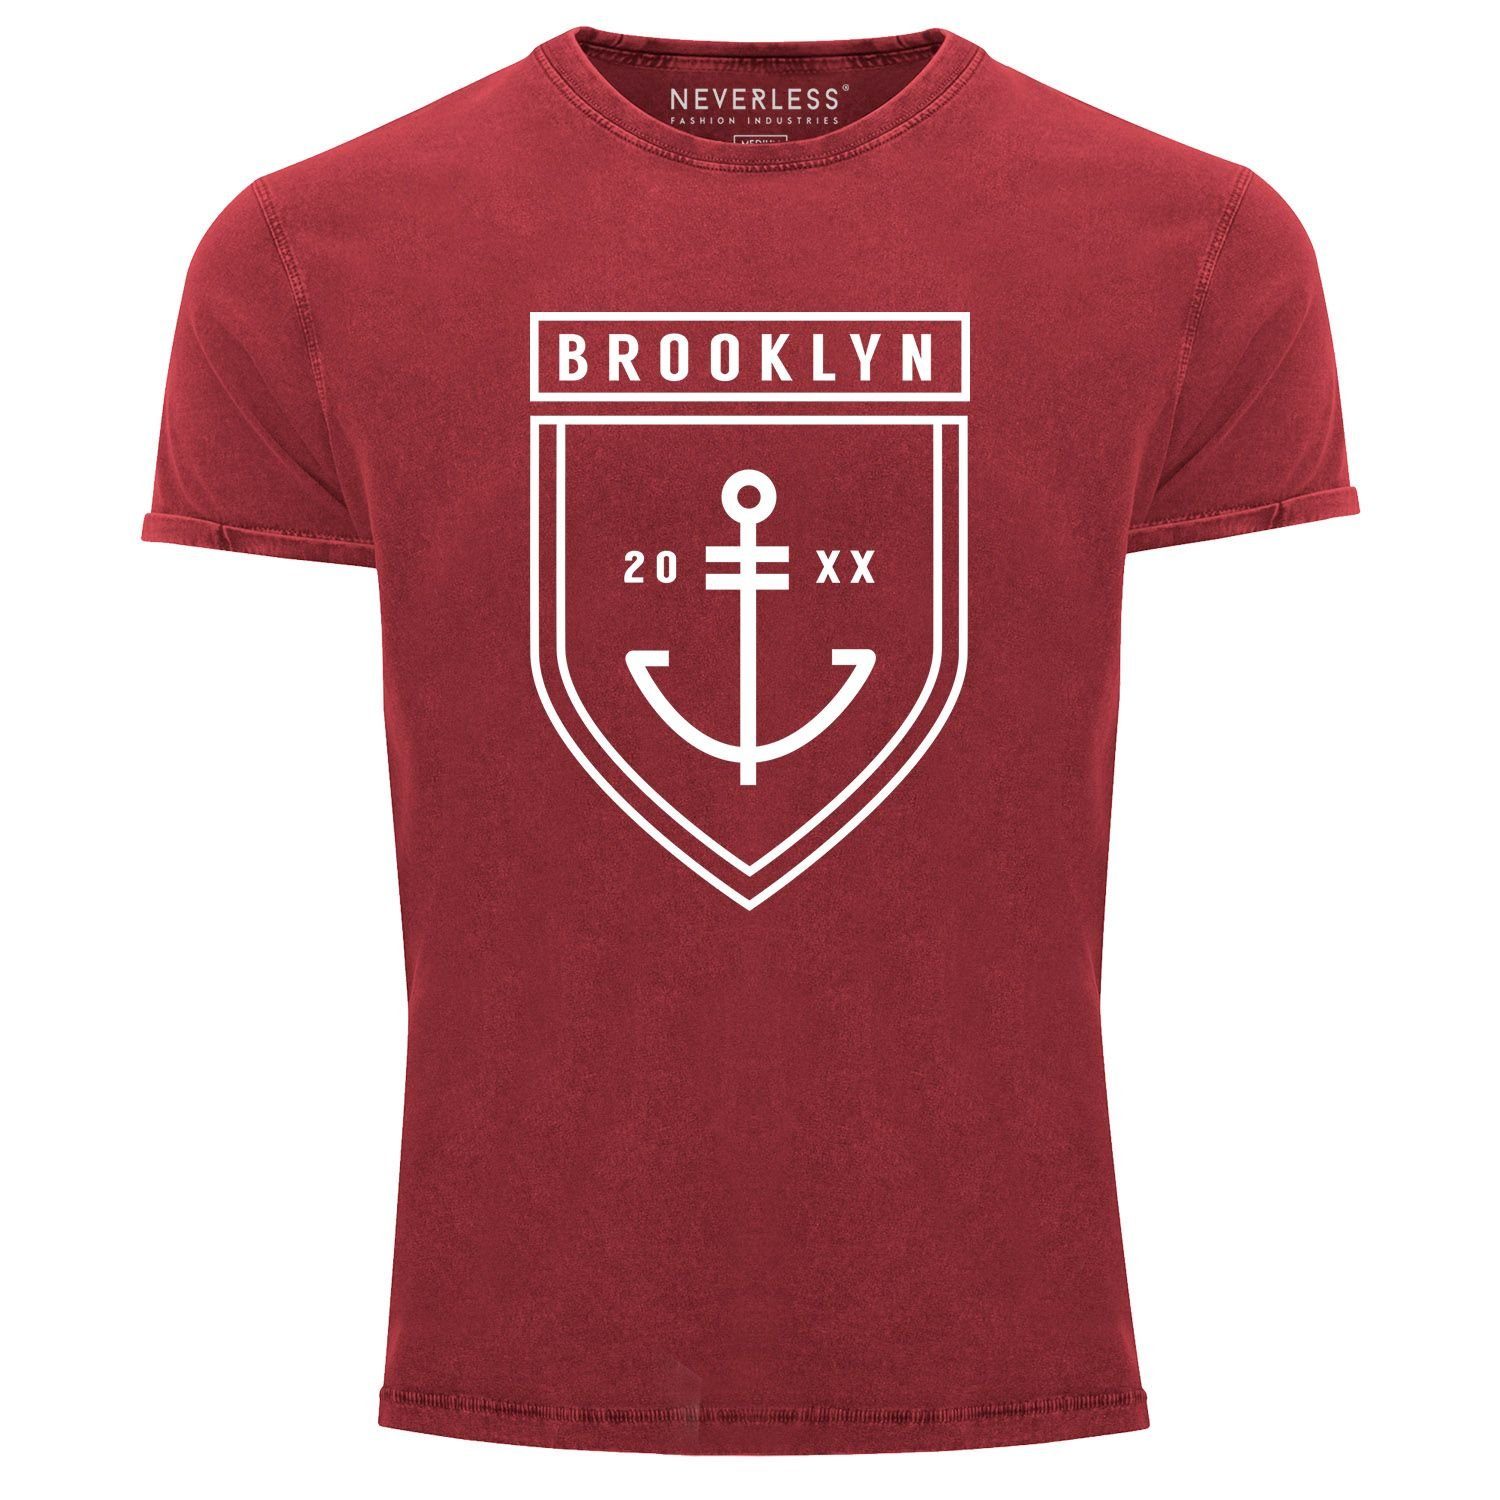 Neverless Print-Shirt Cooles Angesagtes Shirt T-Shirt Look Vintage Herren rot Print Aufdruck Fit Used Anker mit Slim Brooklyn Neverless®